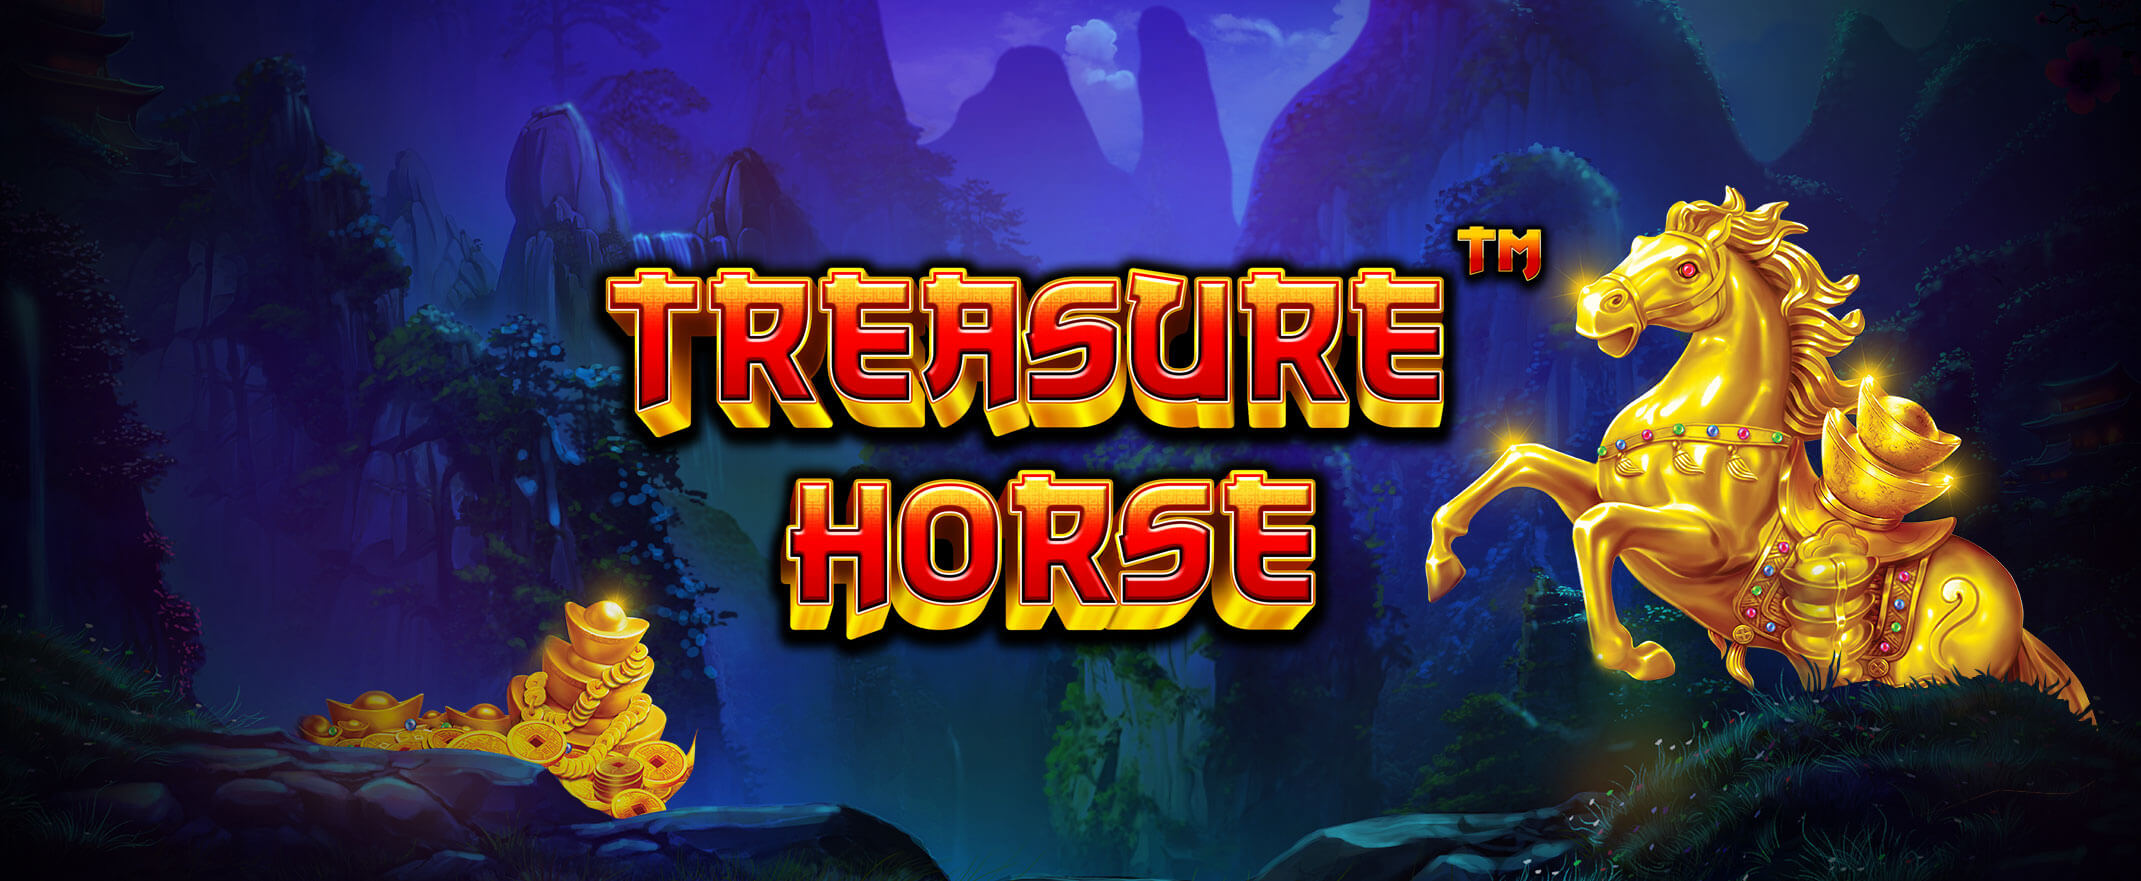 Treasure Horse Spielautomat von Pragmatic Play